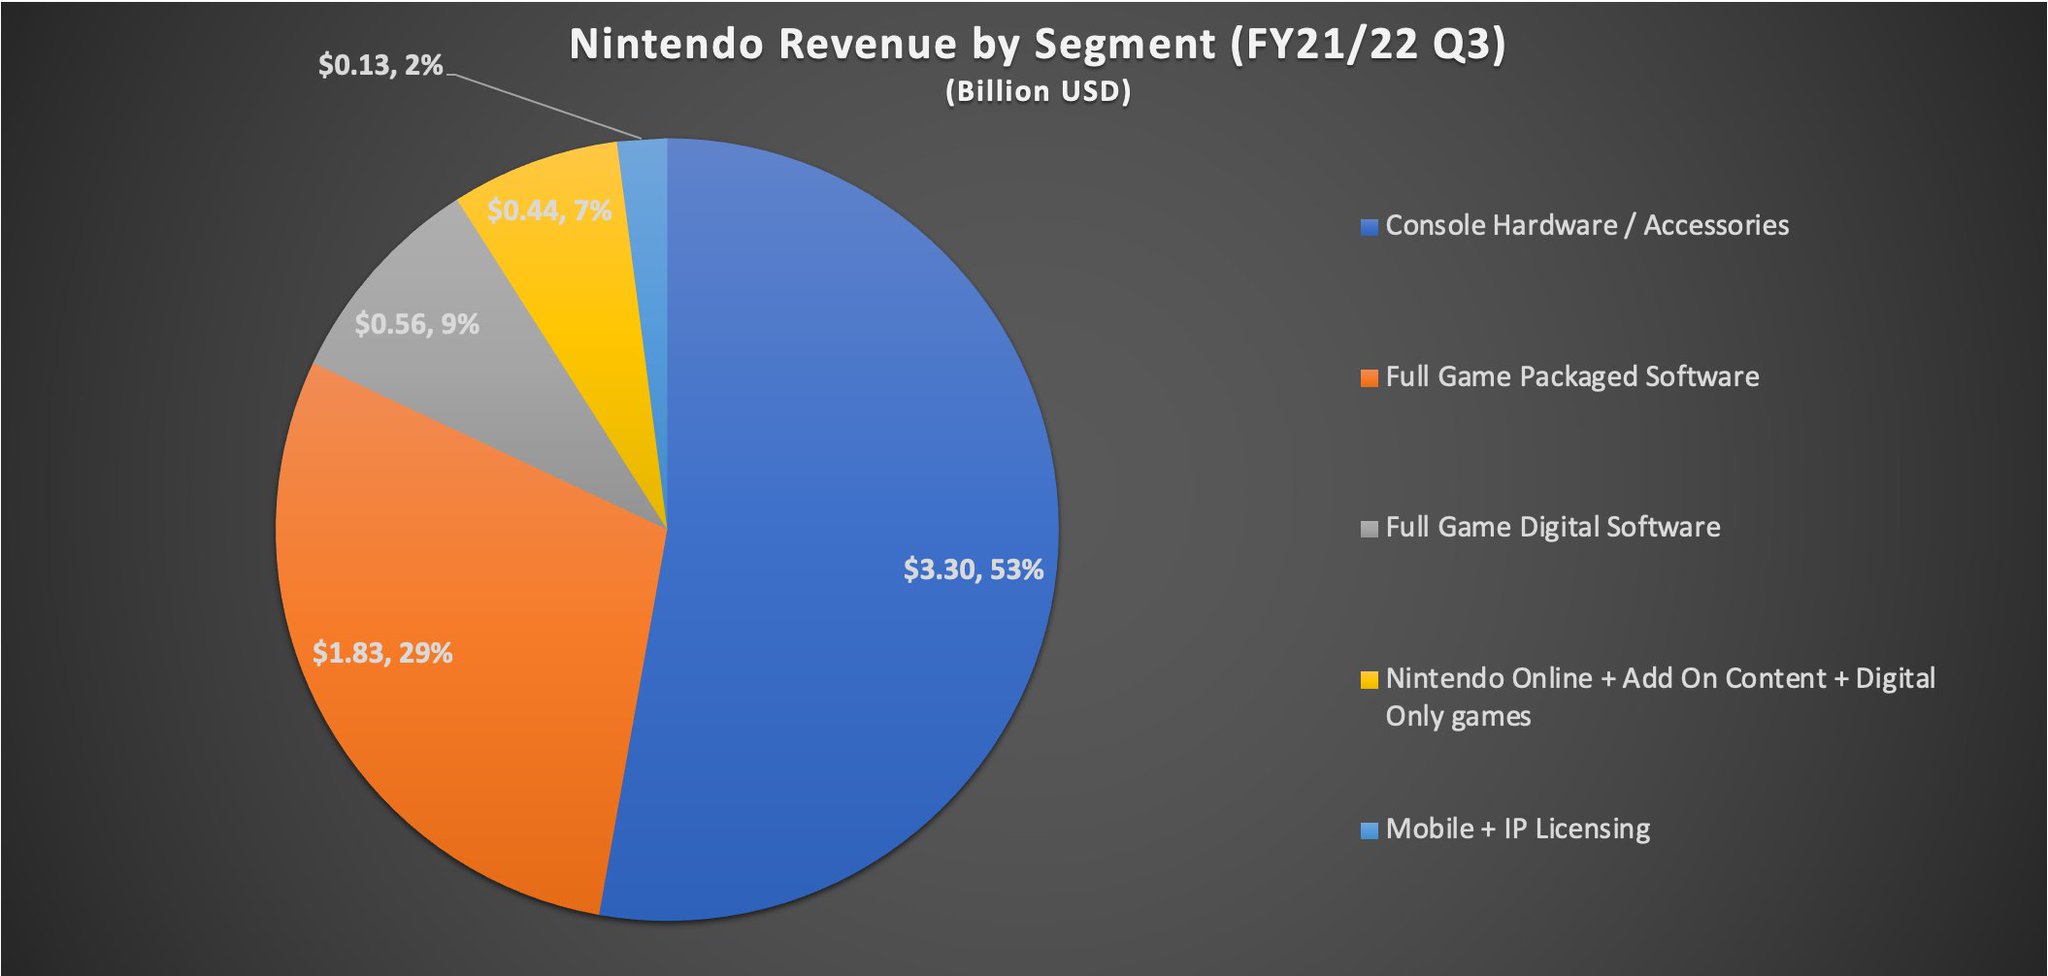 at tilføje lighed Kommentér Daniel Ahmad on Twitter: "Here is a breakout by segment for Nintendo's  FY21/22 Q3 earnings (Oct - Dec 2021): Console Hardware: $3.3bn / 53%  Packaged Software: $1.83bn / 29% Digital Software: $0.56bn /